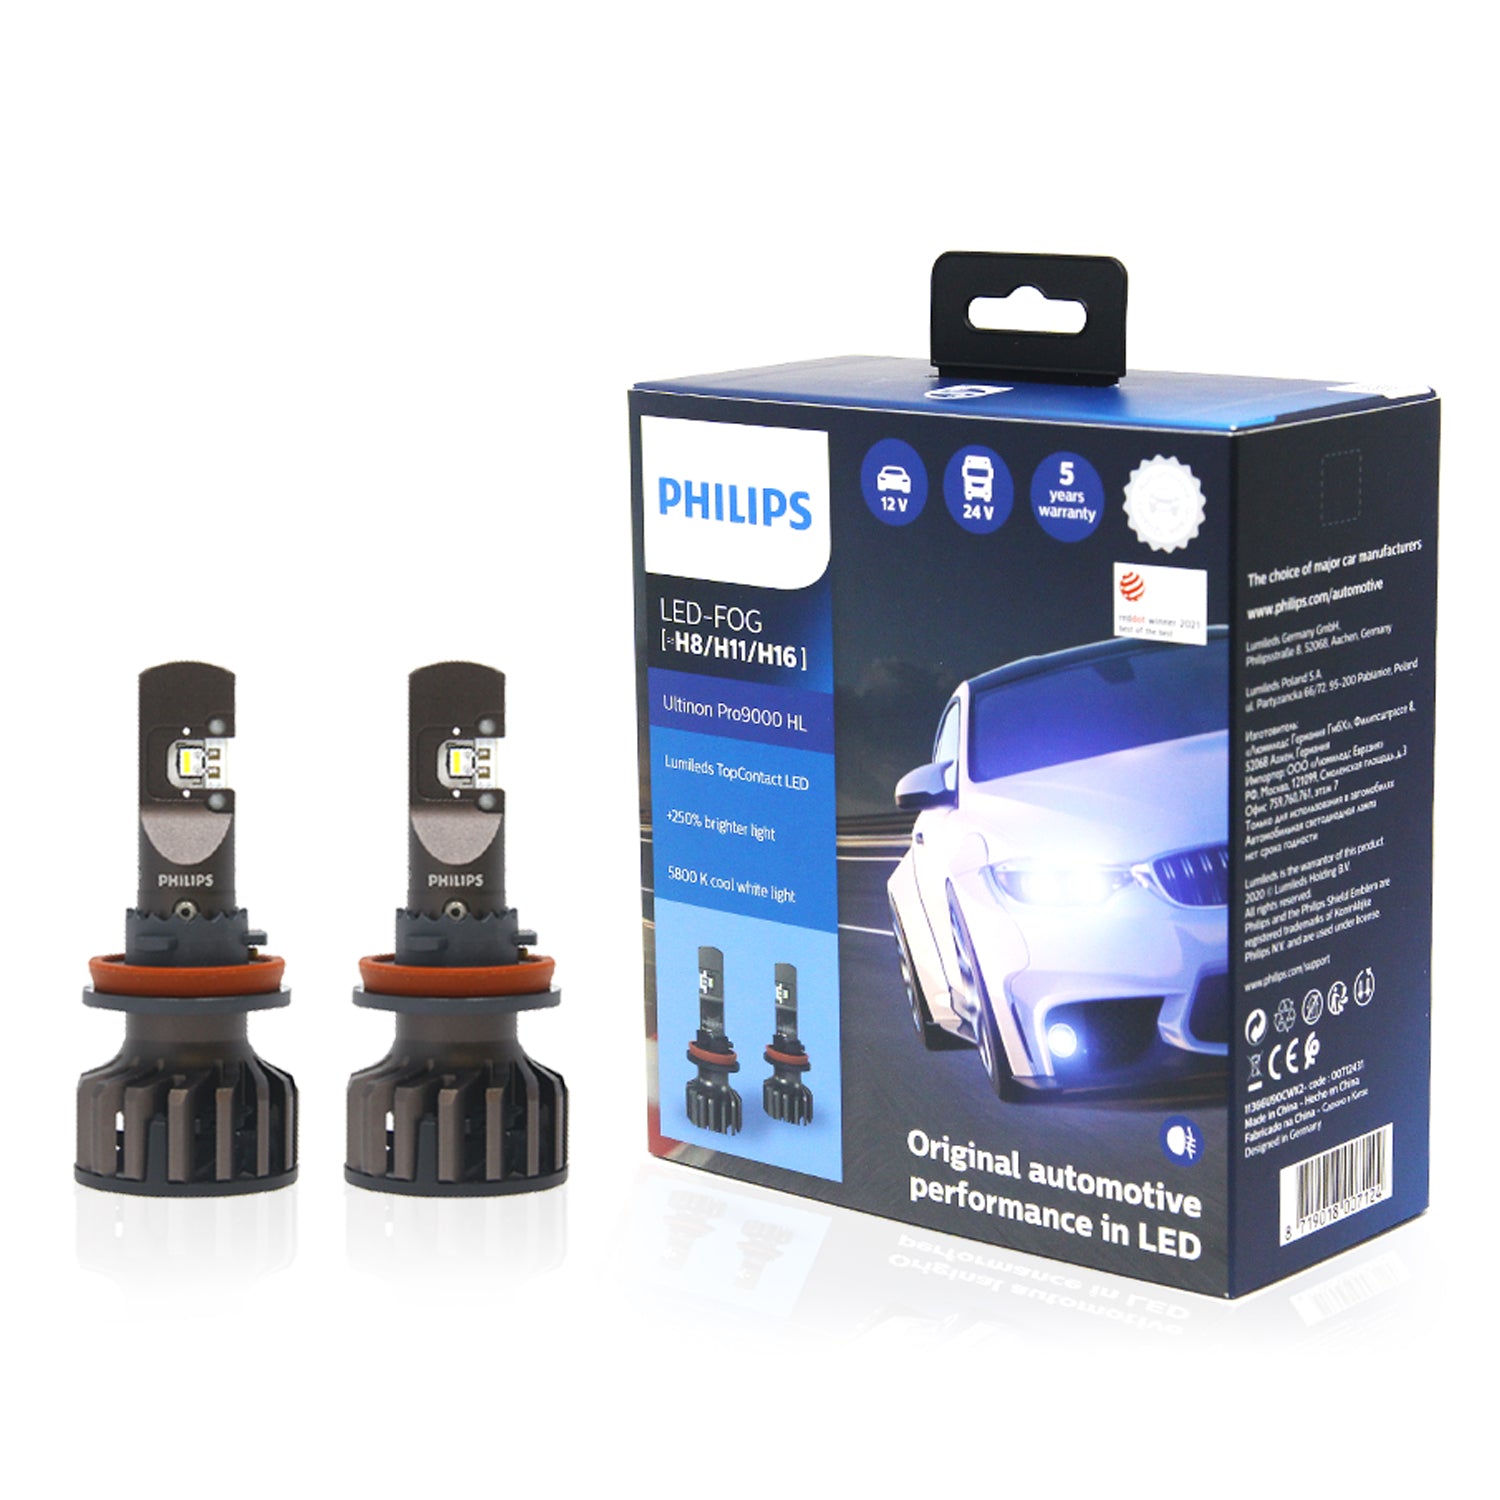 PHILIPS X-tremeUltinon LED gen2 5800K HIR2 Bulbs